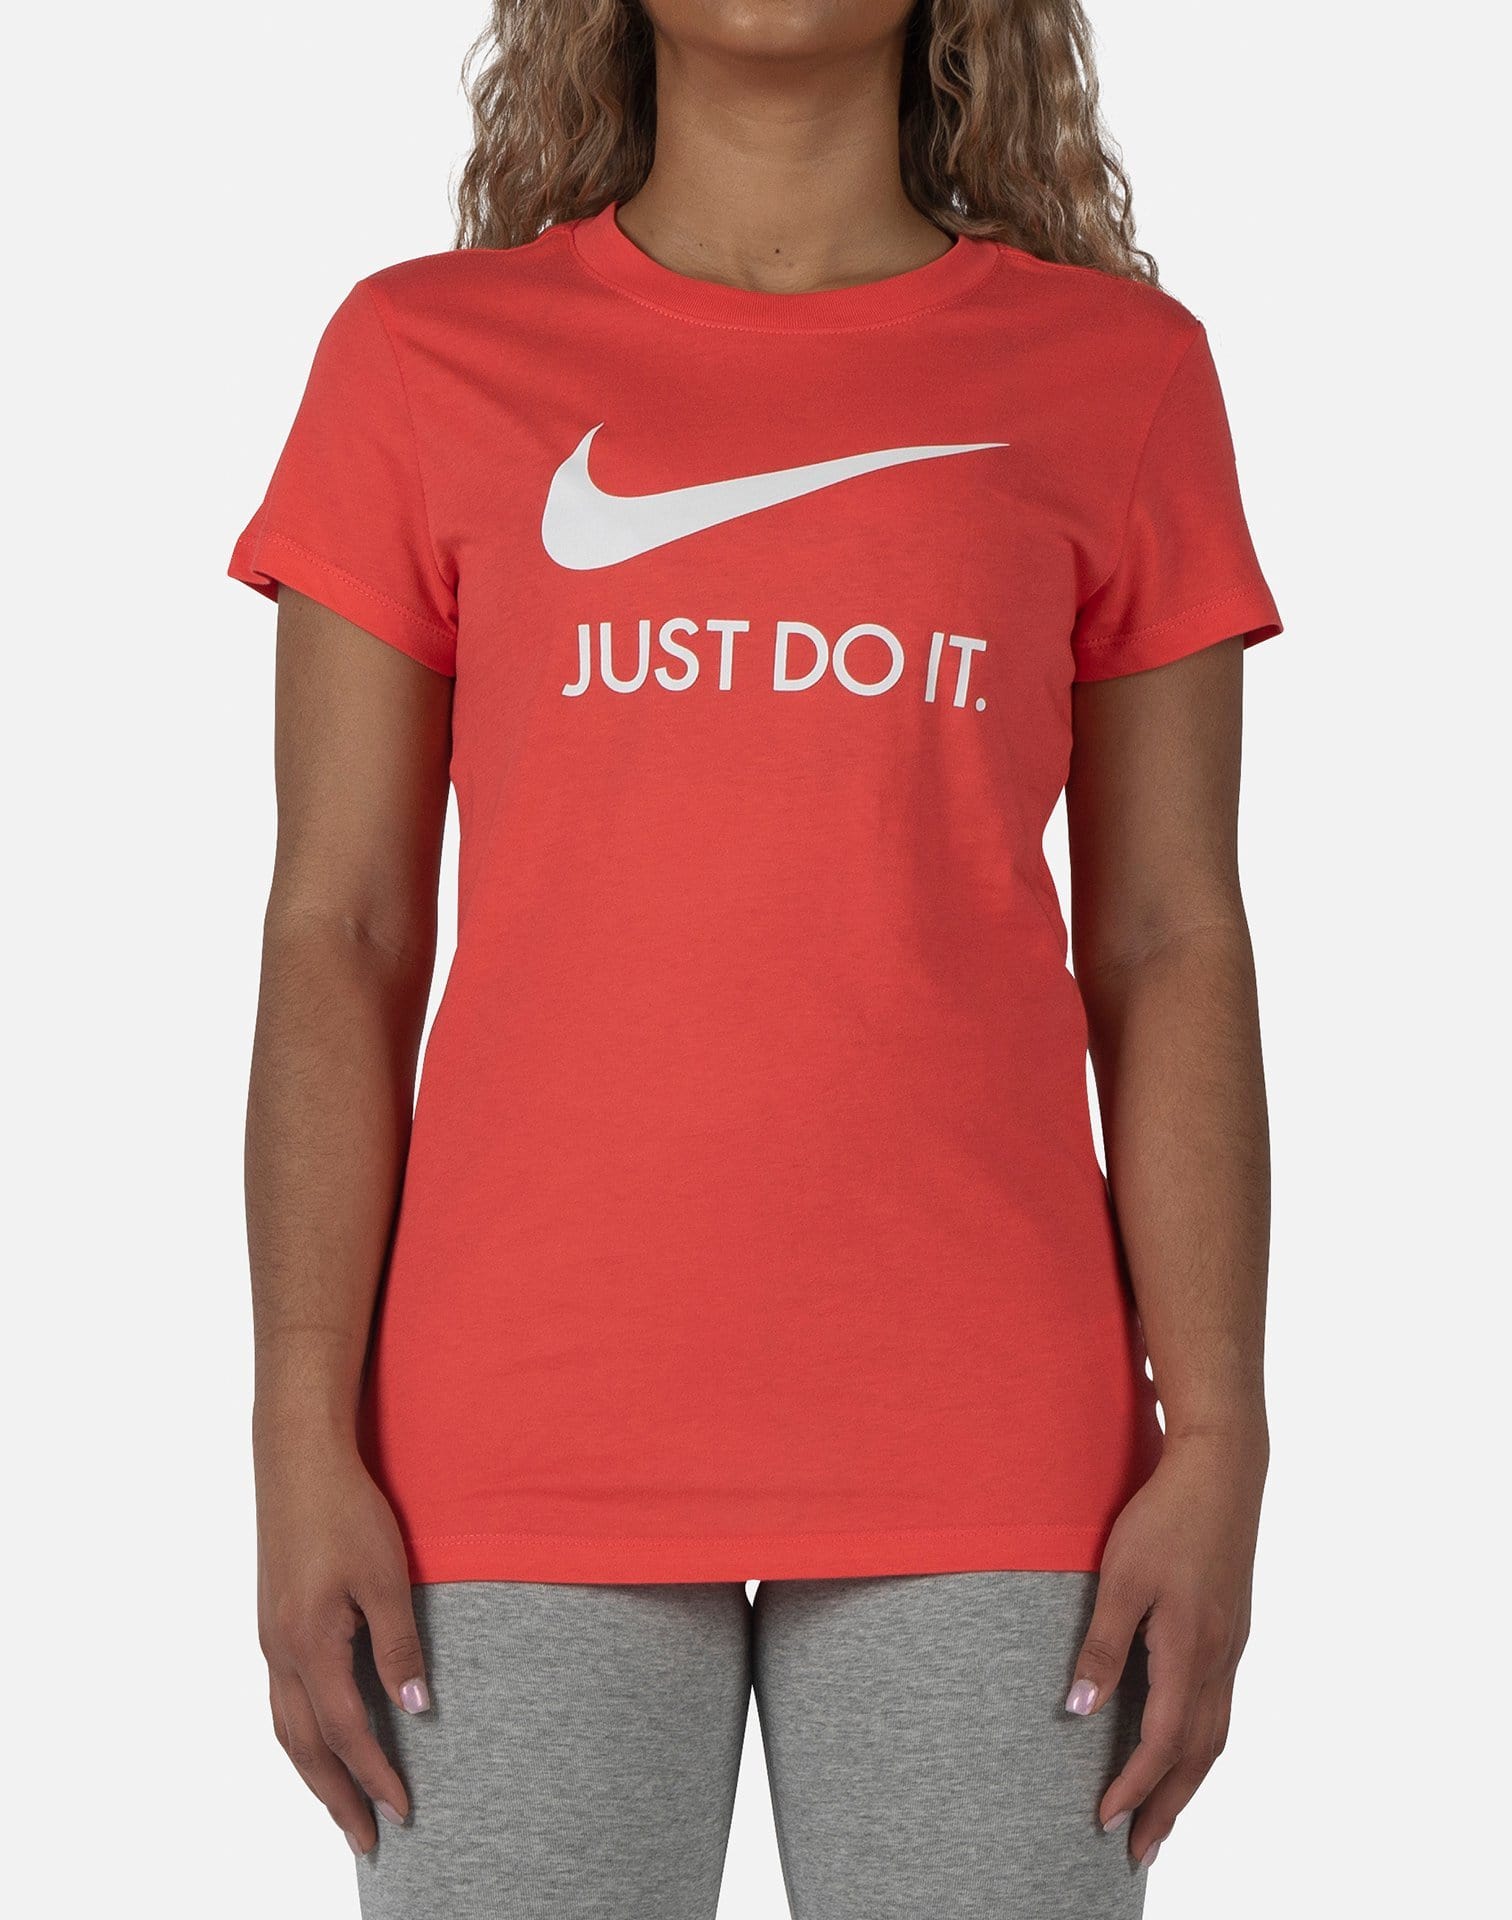 Nike Women's Just Do It Slim Tee